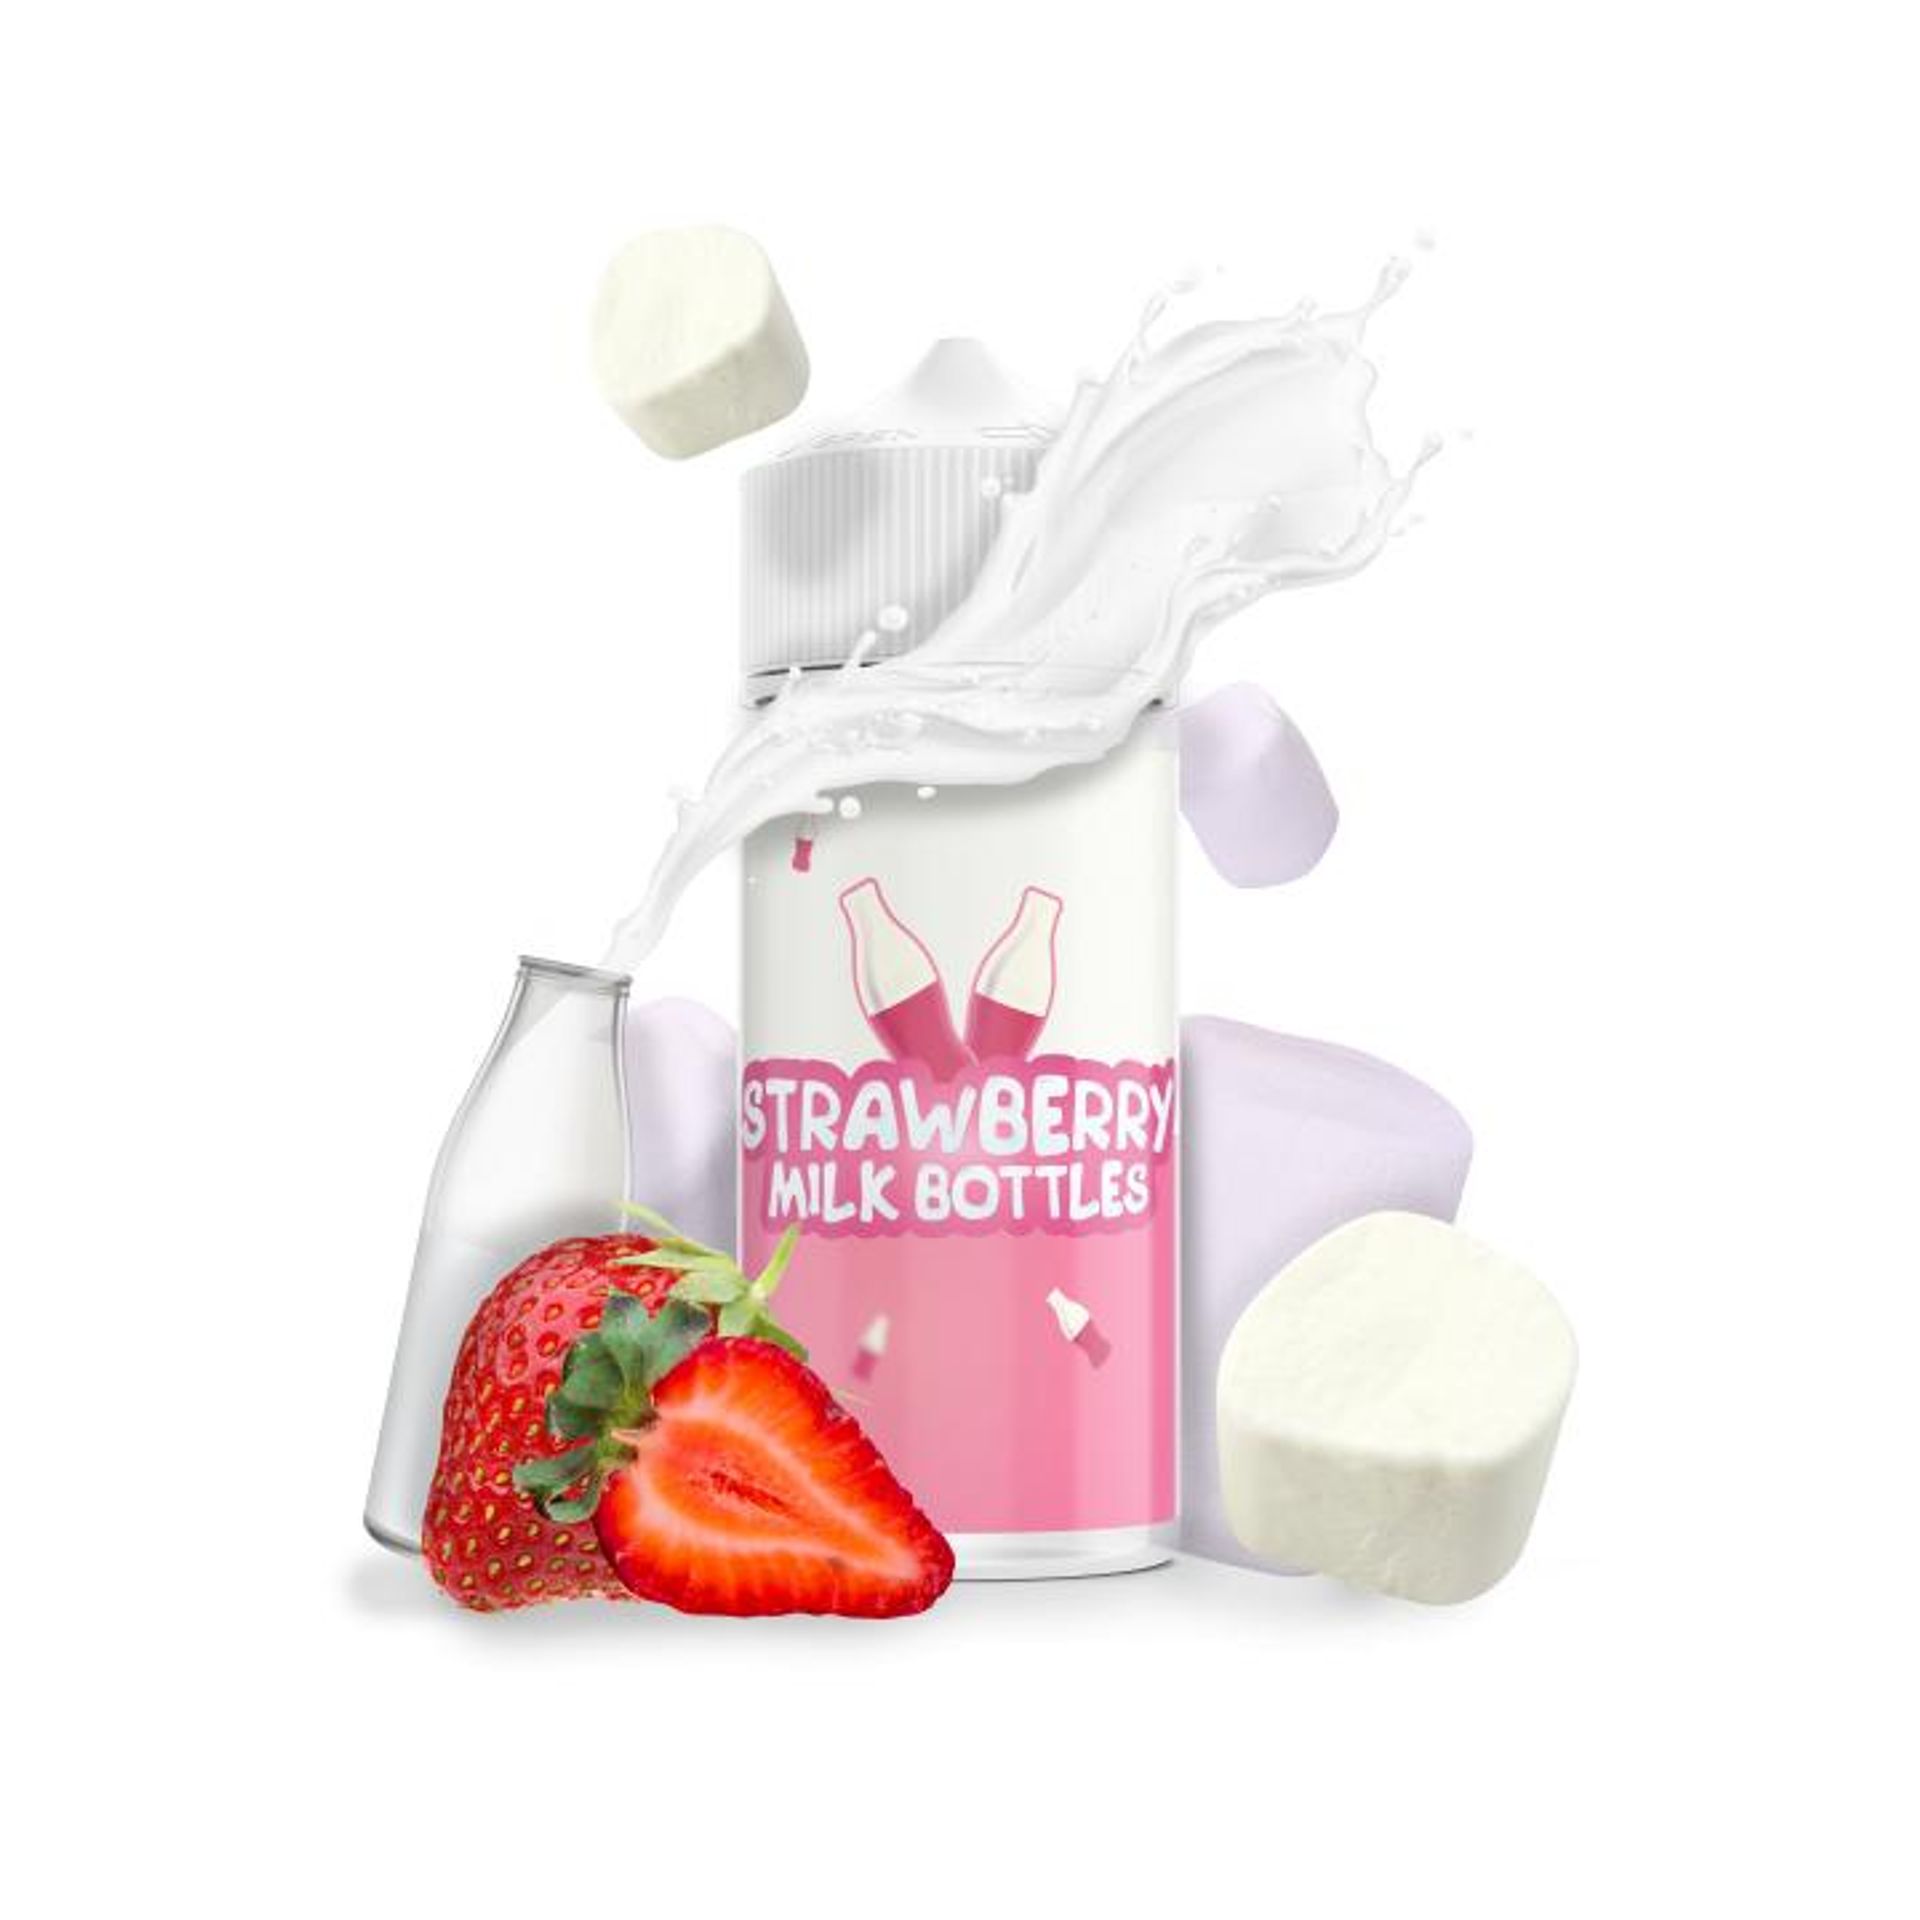 Image of Strawberry Milk Bottles by Strawberry Milk Bottles